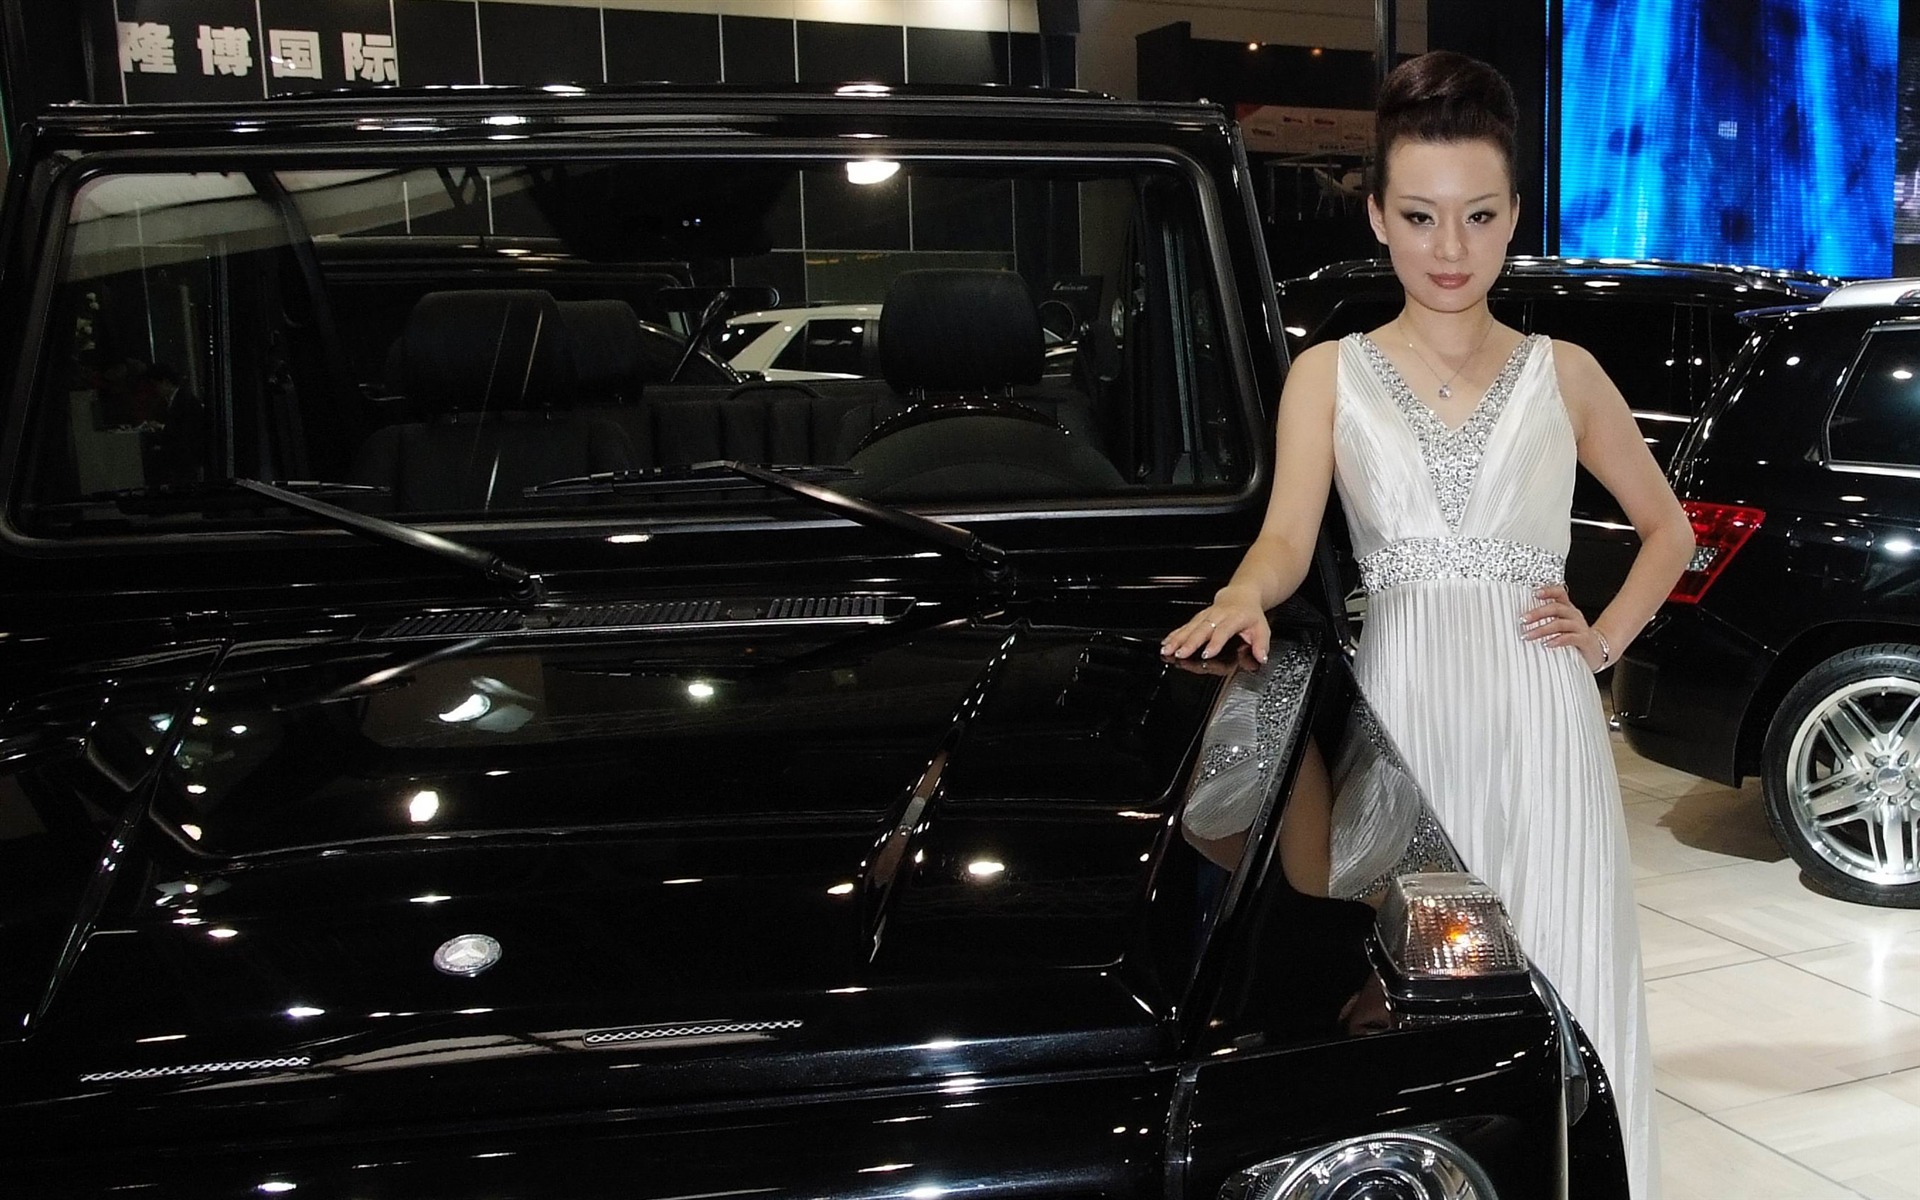 2010 Salón Internacional del Automóvil de Beijing Heung Che belleza (obras barras de refuerzo) #7 - 1920x1200